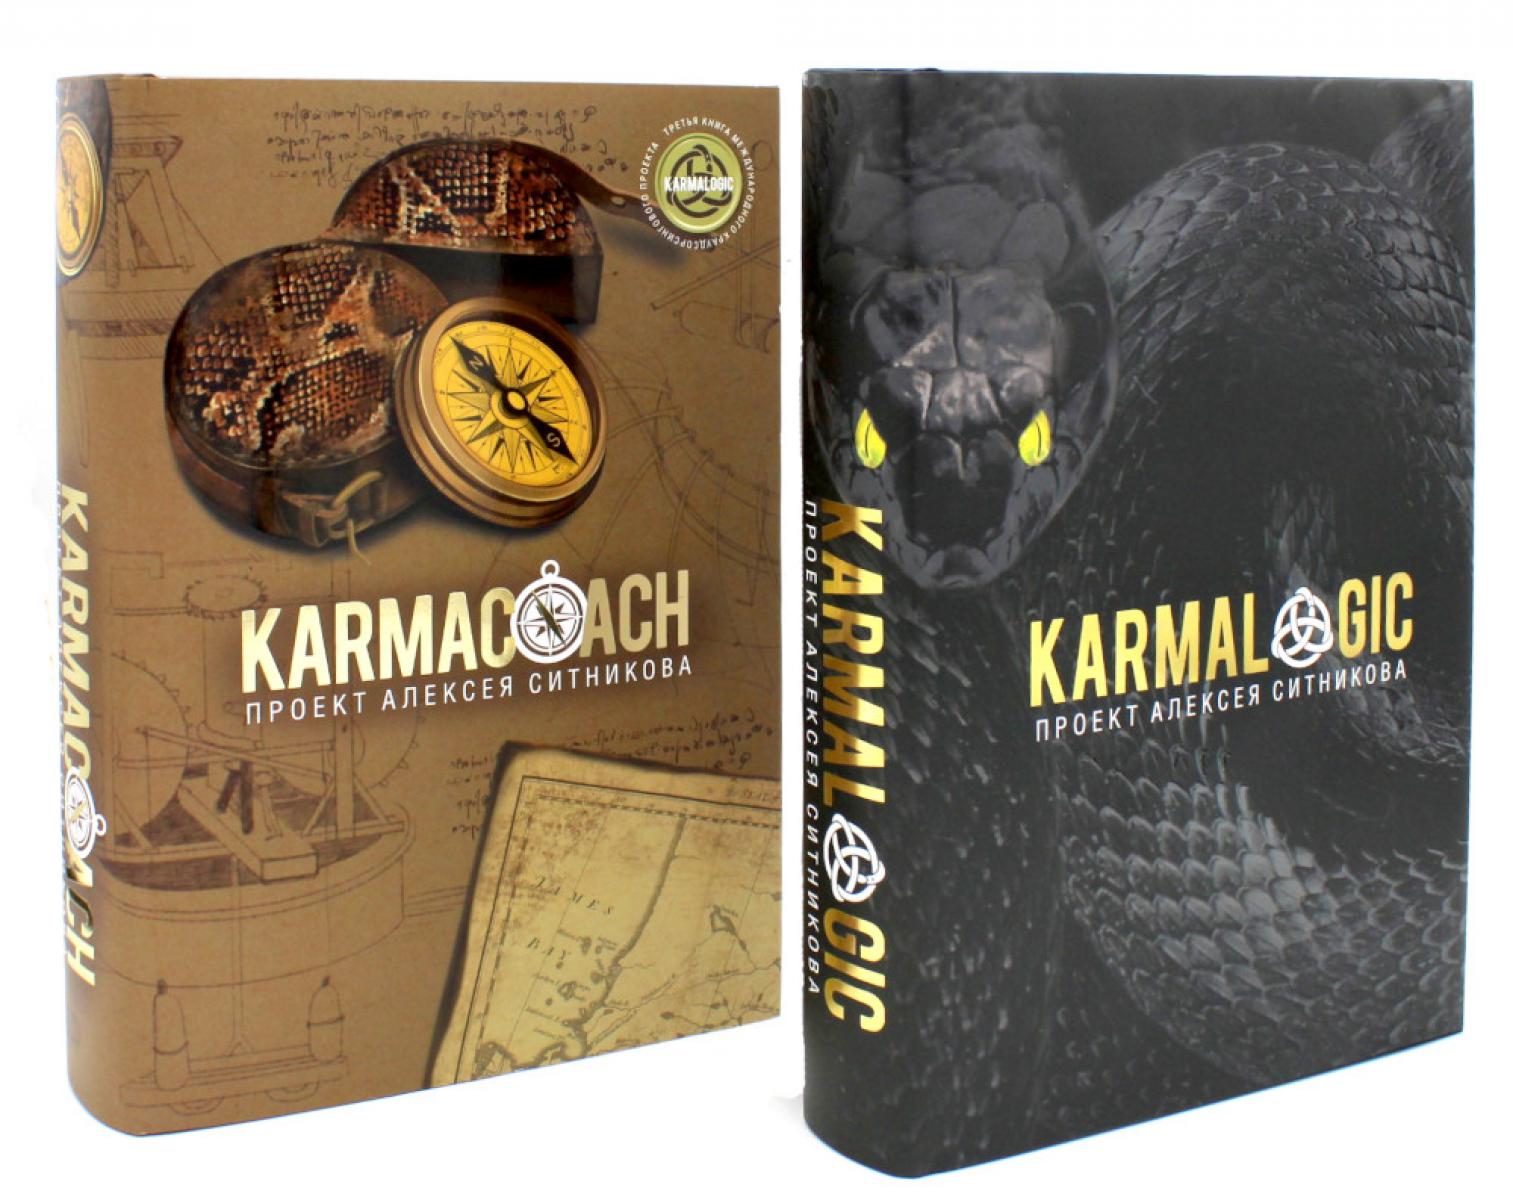 KARMALOGIC+KARMACOACH -  .  2- 